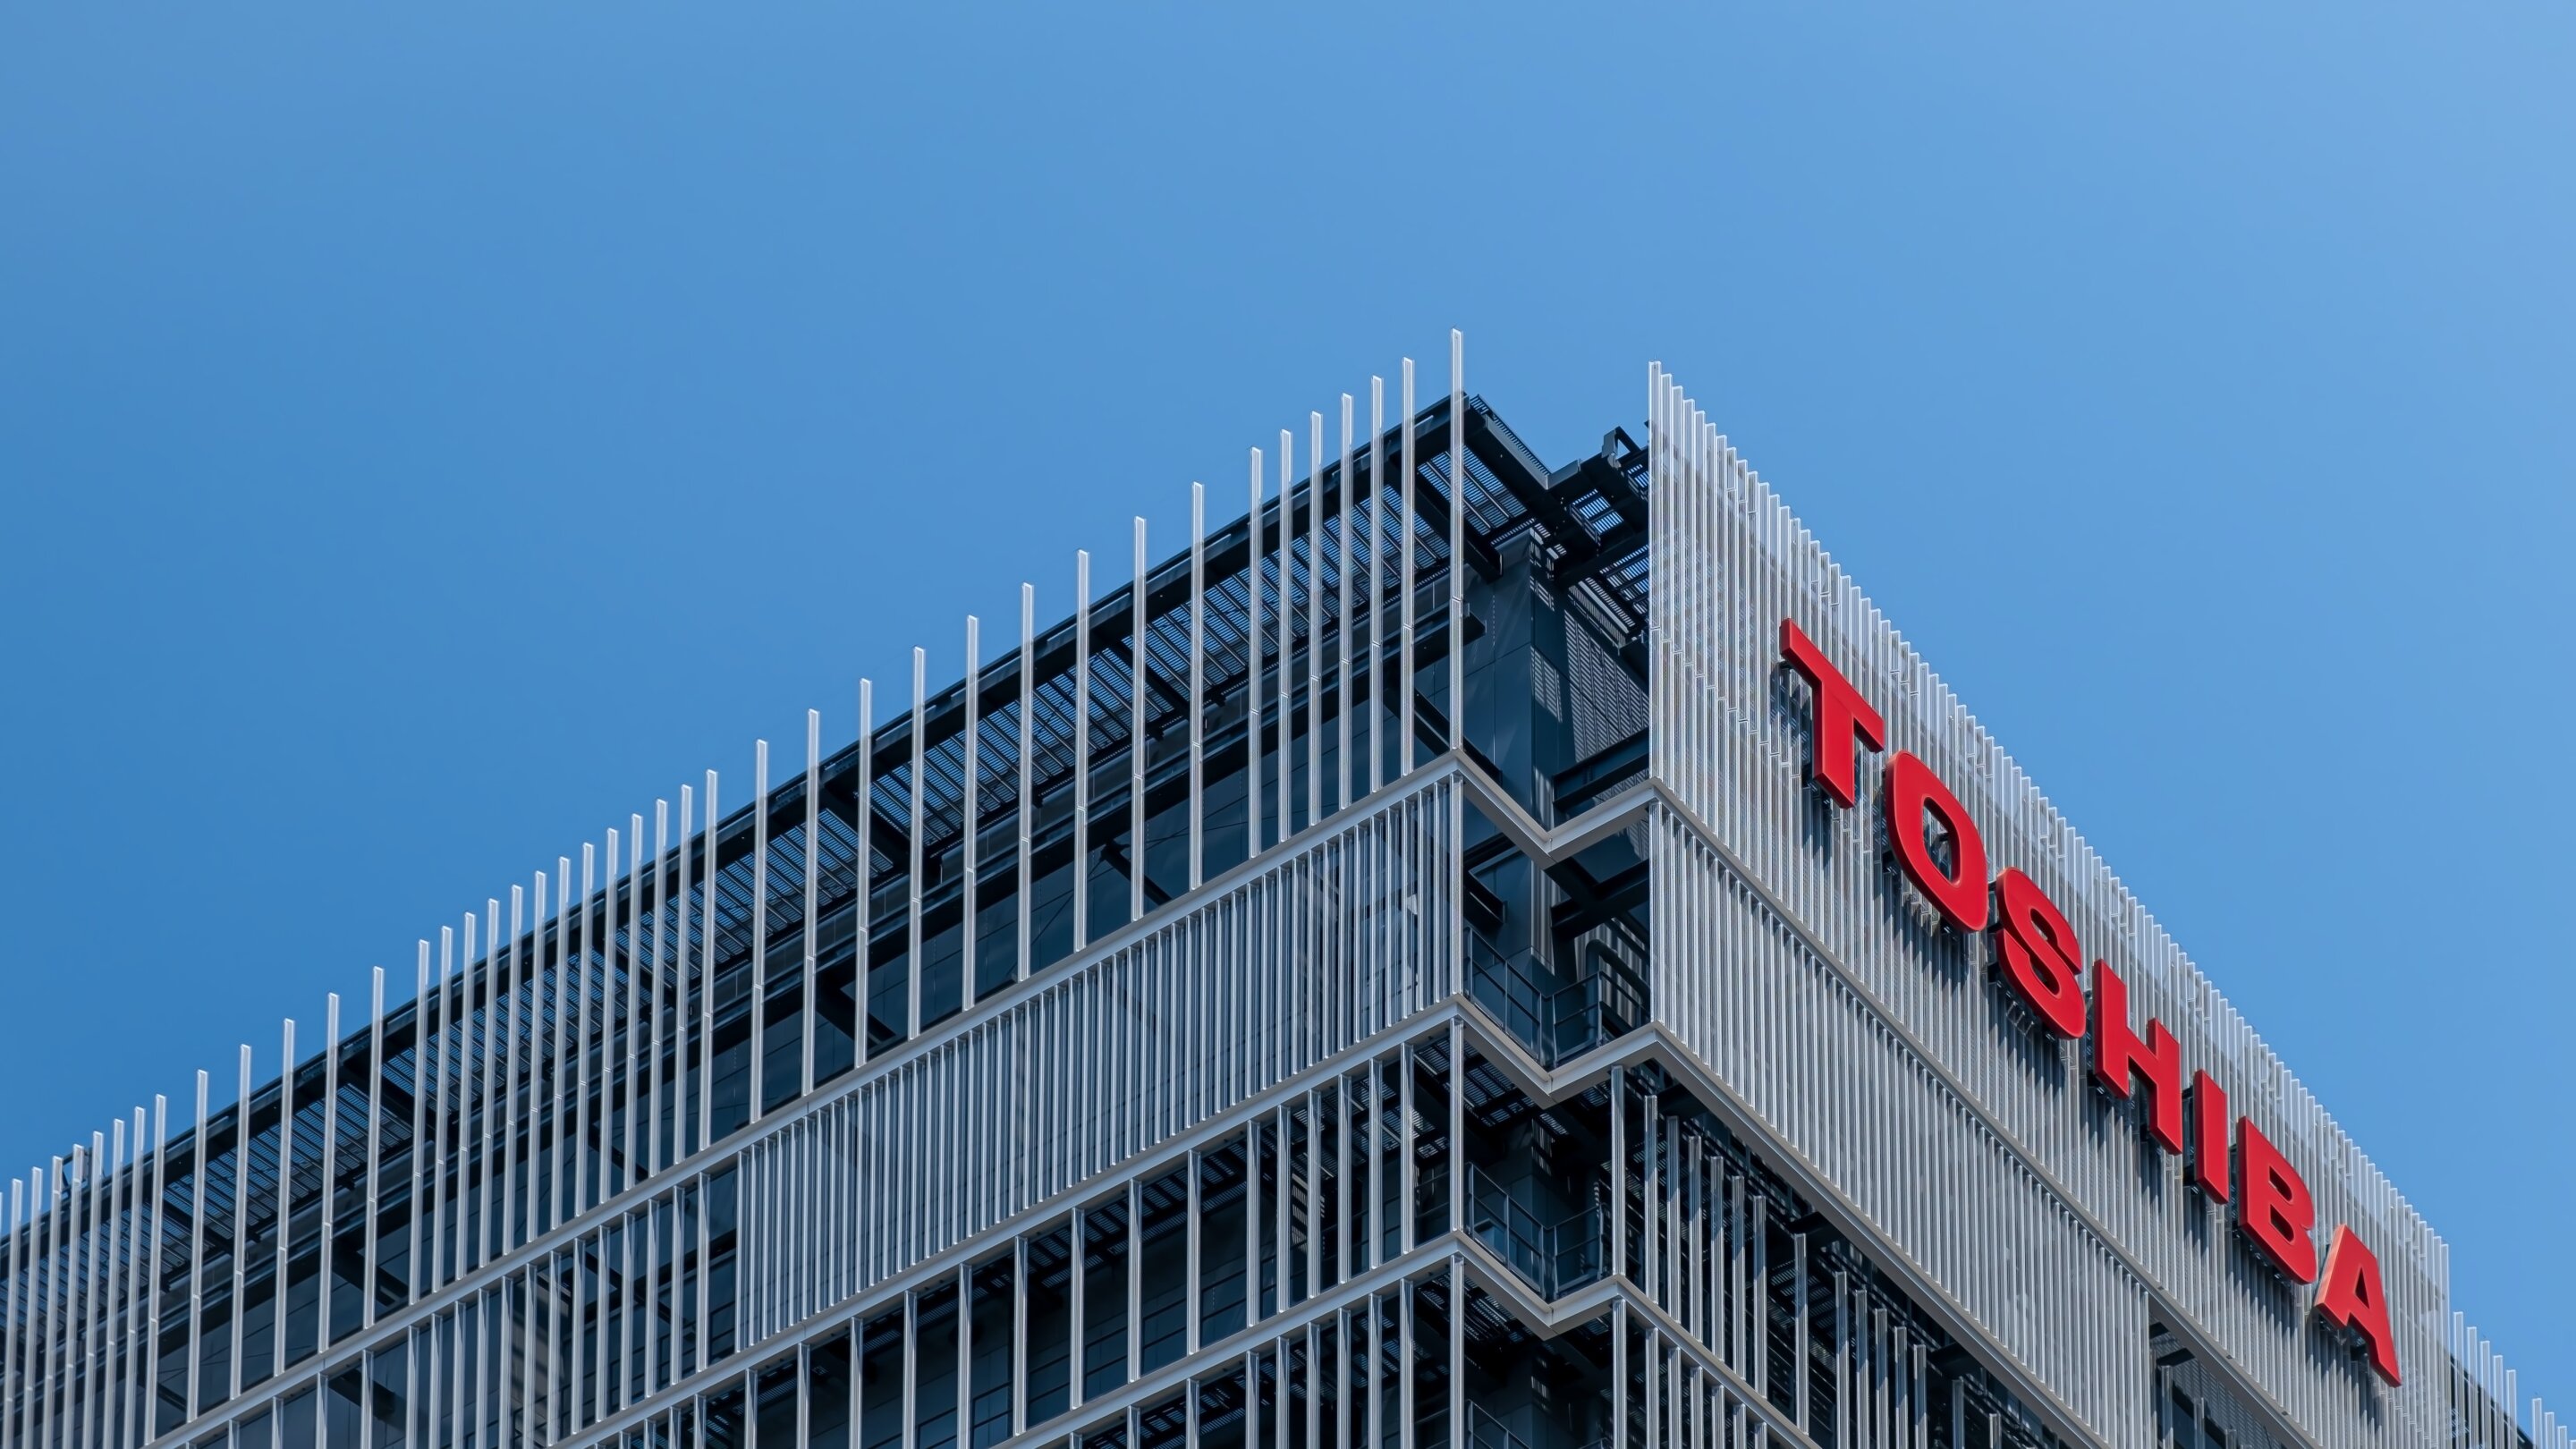 Toshiba posts 35% decline in full-year net profit